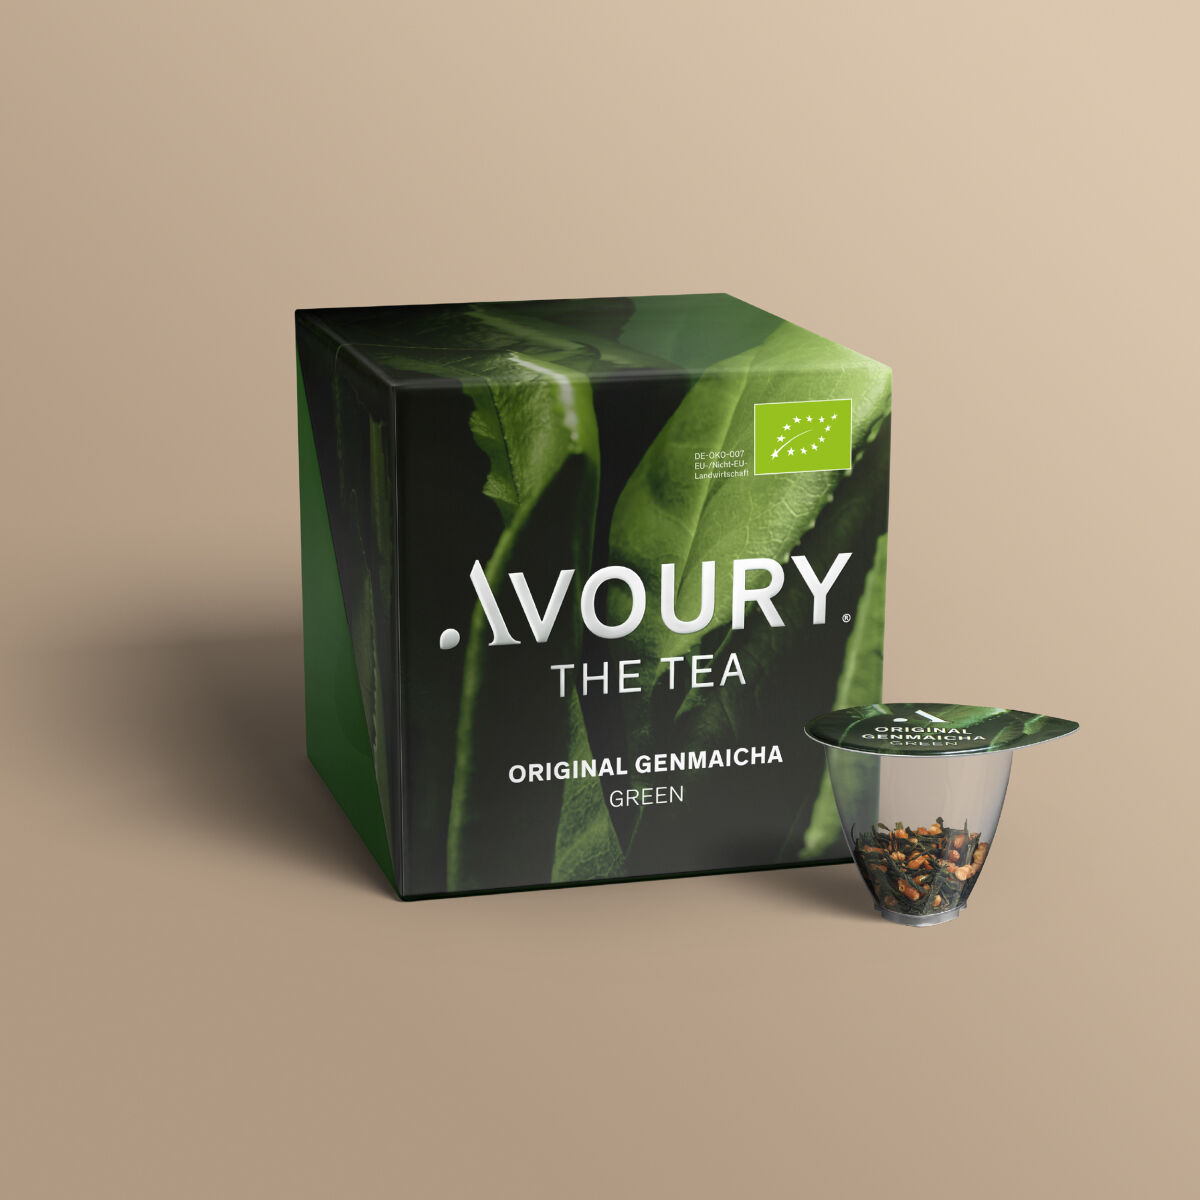 Avoury tea box with capsule - Original Genmaicha tea